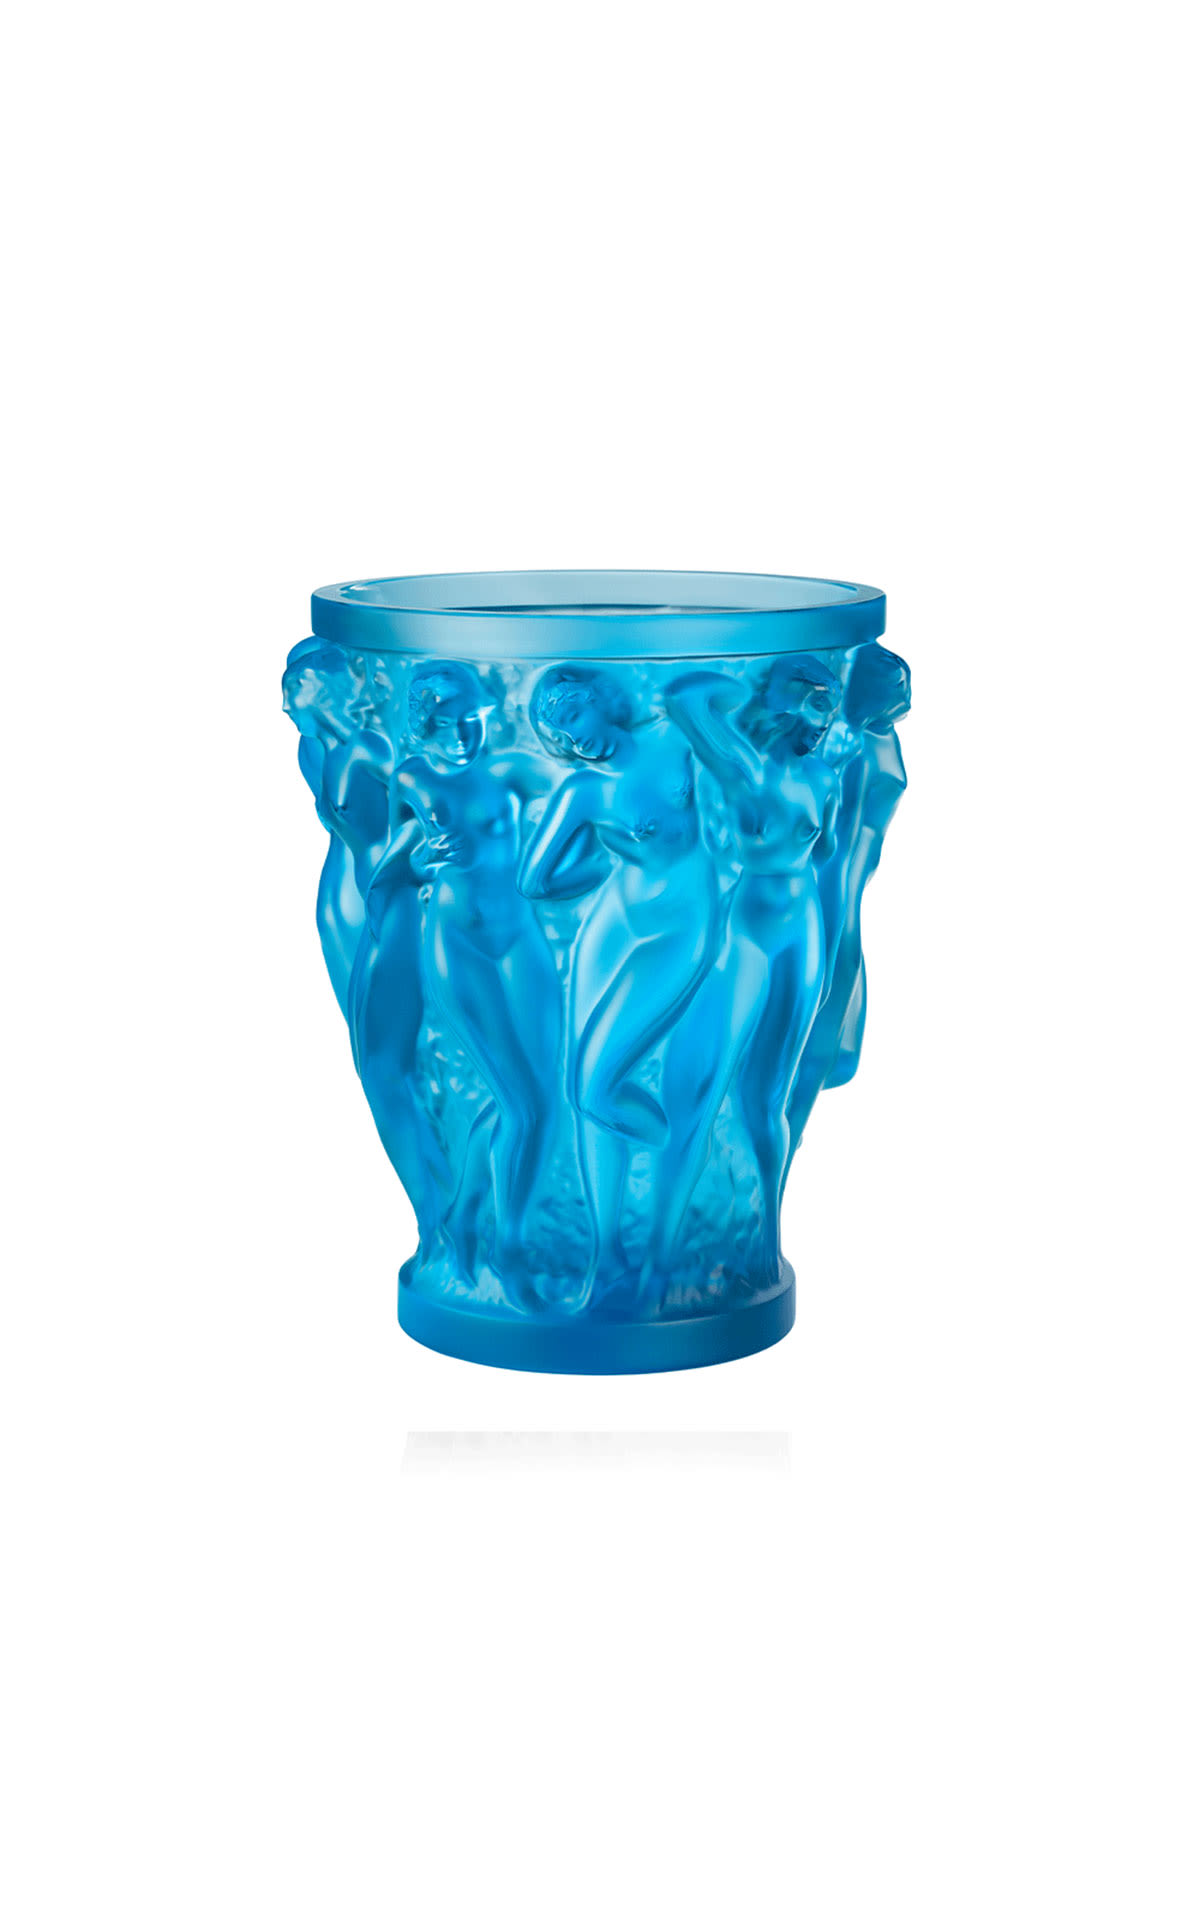 Lalique Blue vase bacchantes from Bicester Village